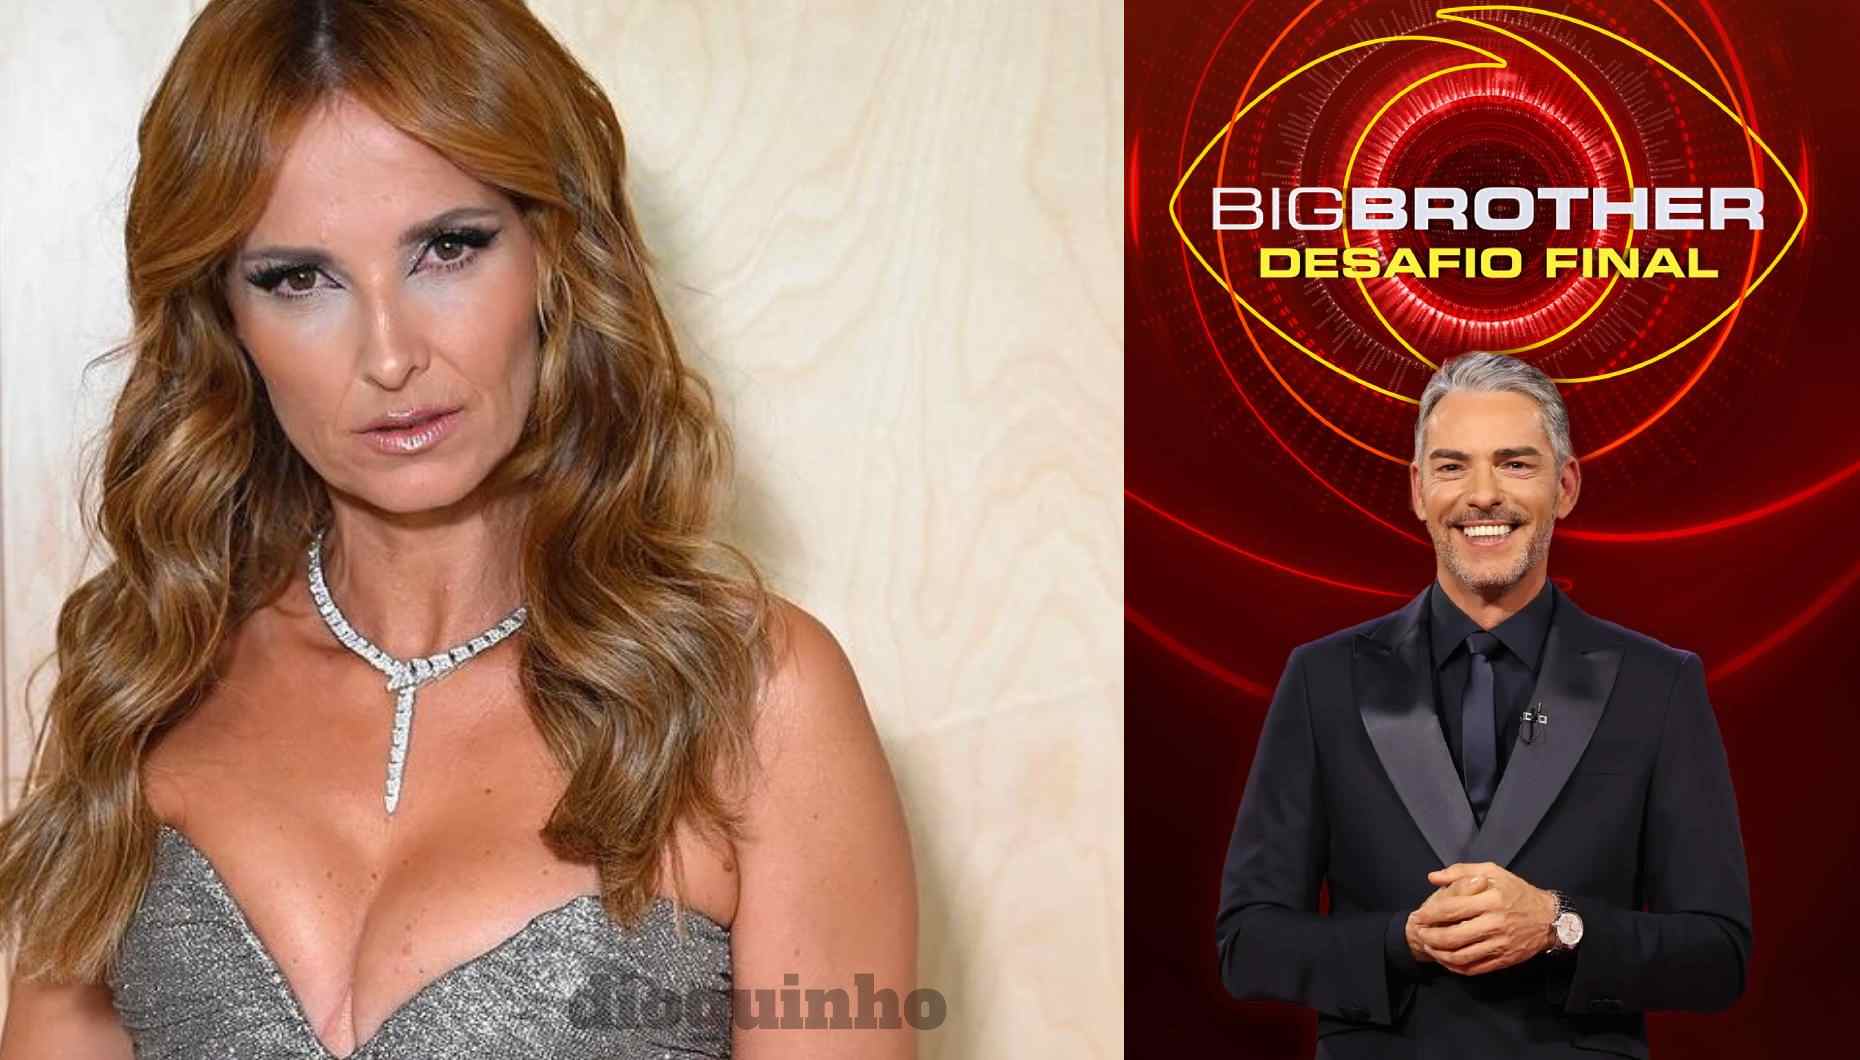 Big Brother – Desafio Final - BB: Desafio Final - Nova data para a grande final do “Big Brother – Desafio Final”